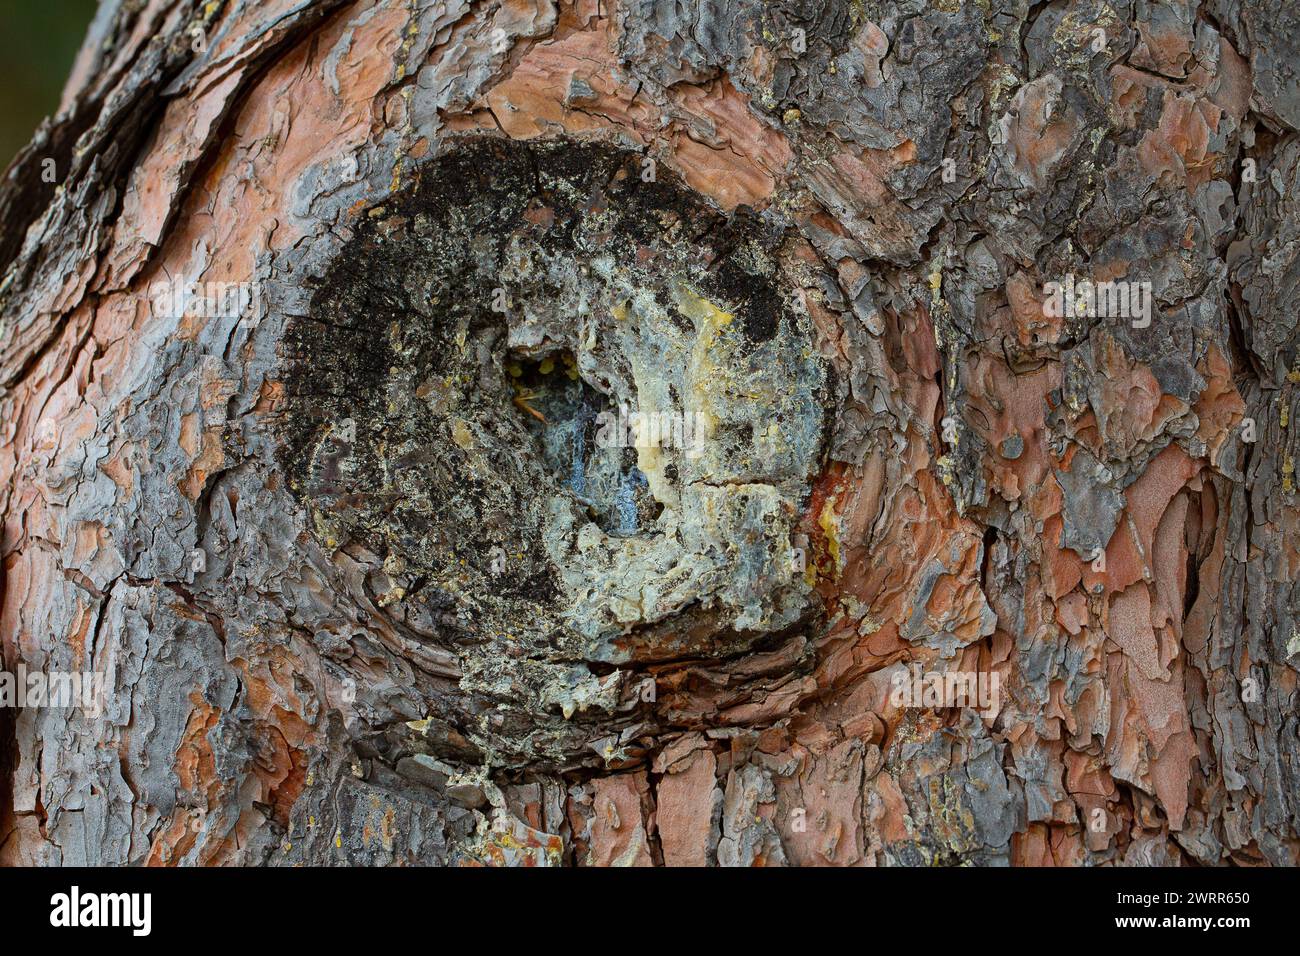 Macro shot of rough pine bark with a natural resin deposit Stock Photo